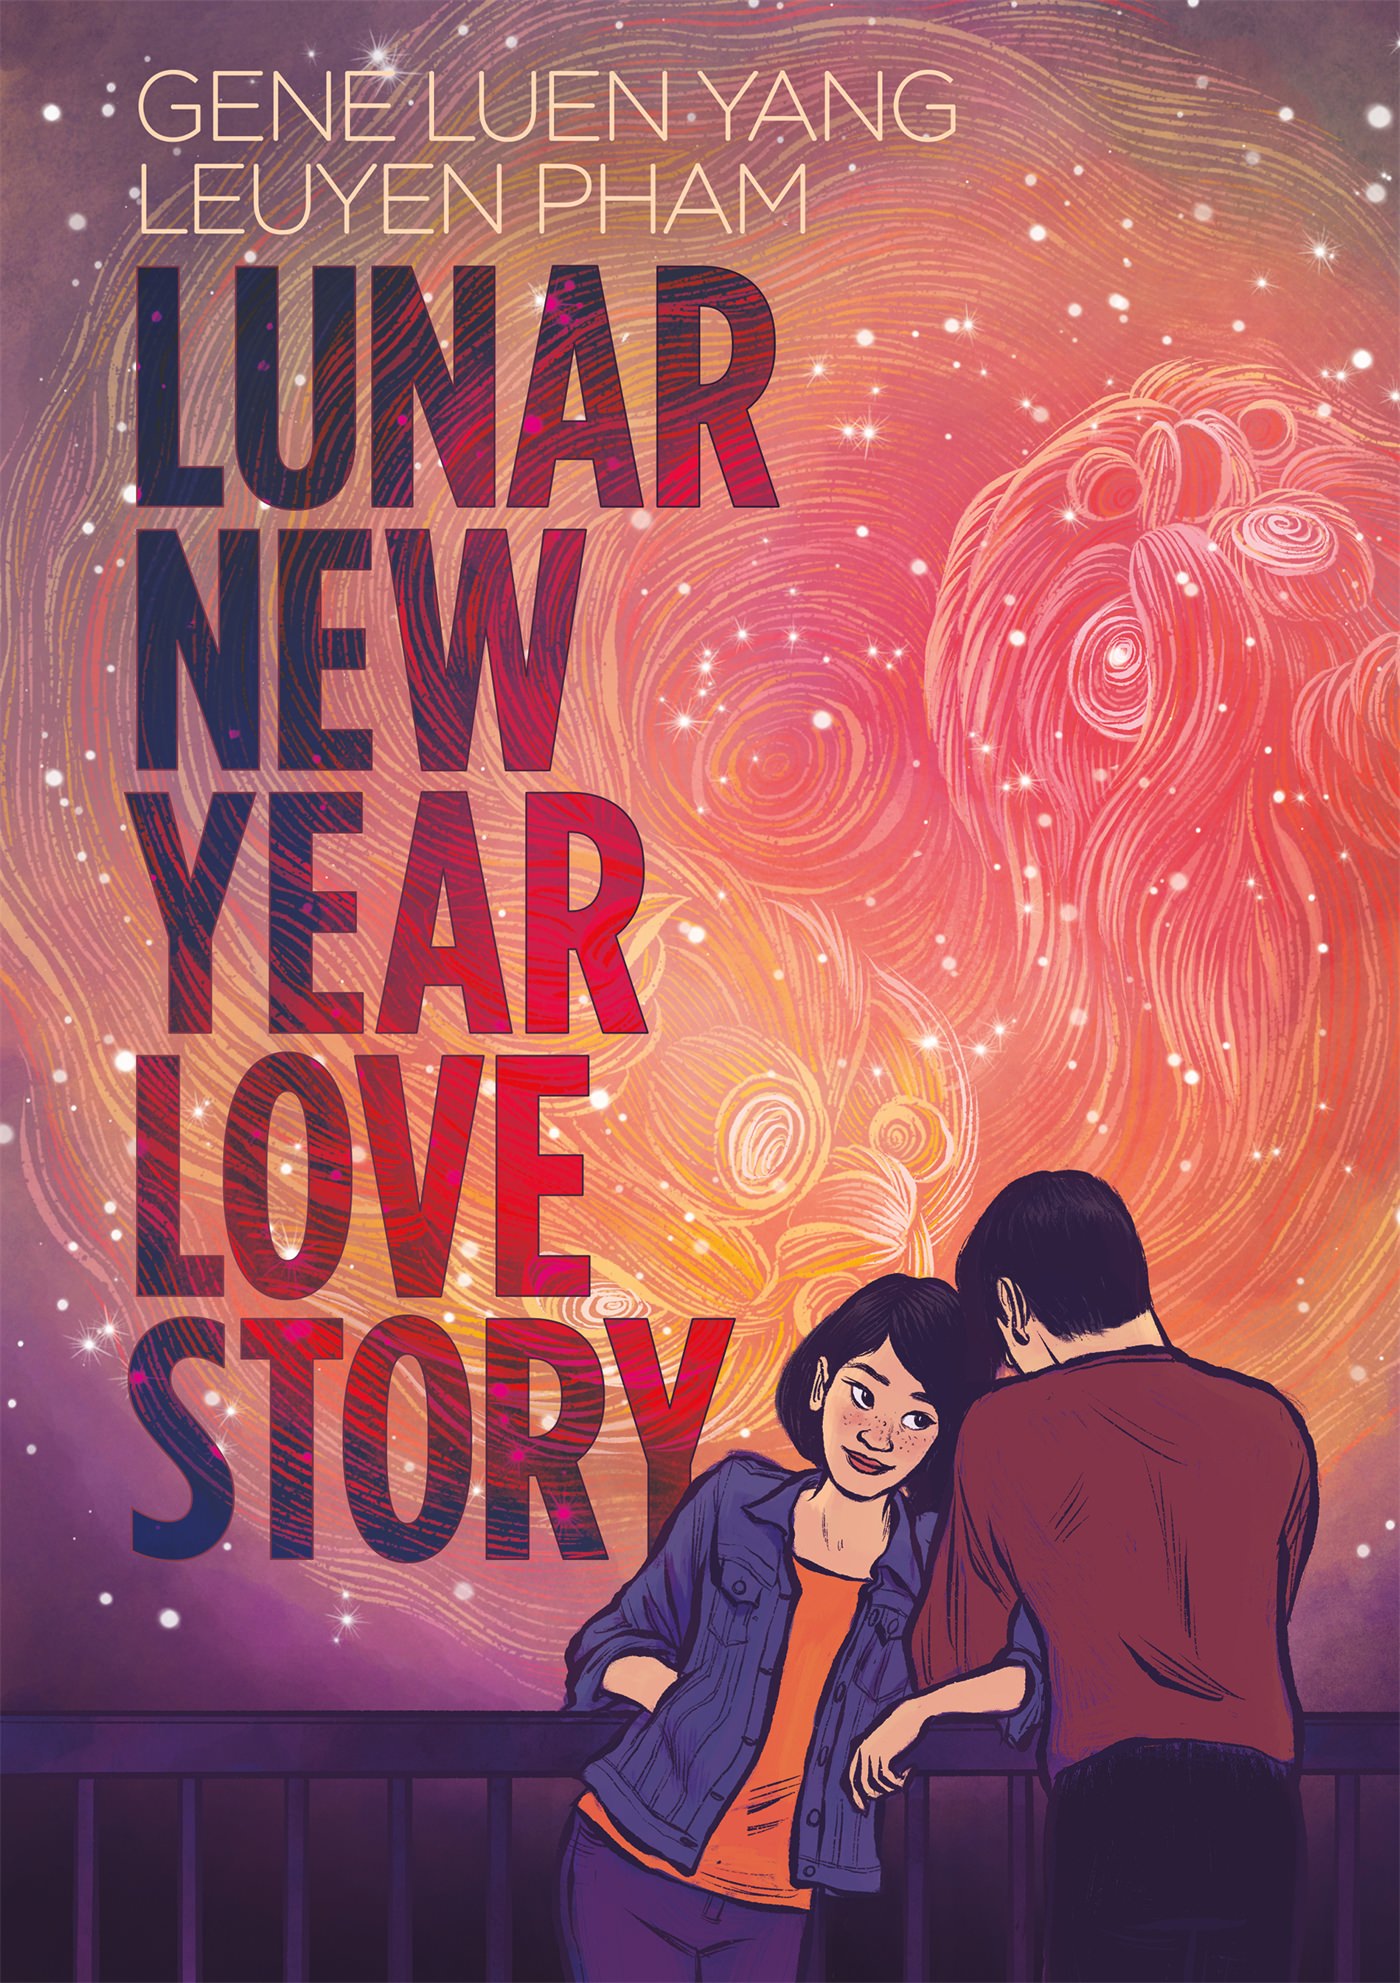 Lunar New Year Love Story by Gene Luen Yang, LeUyen Pham